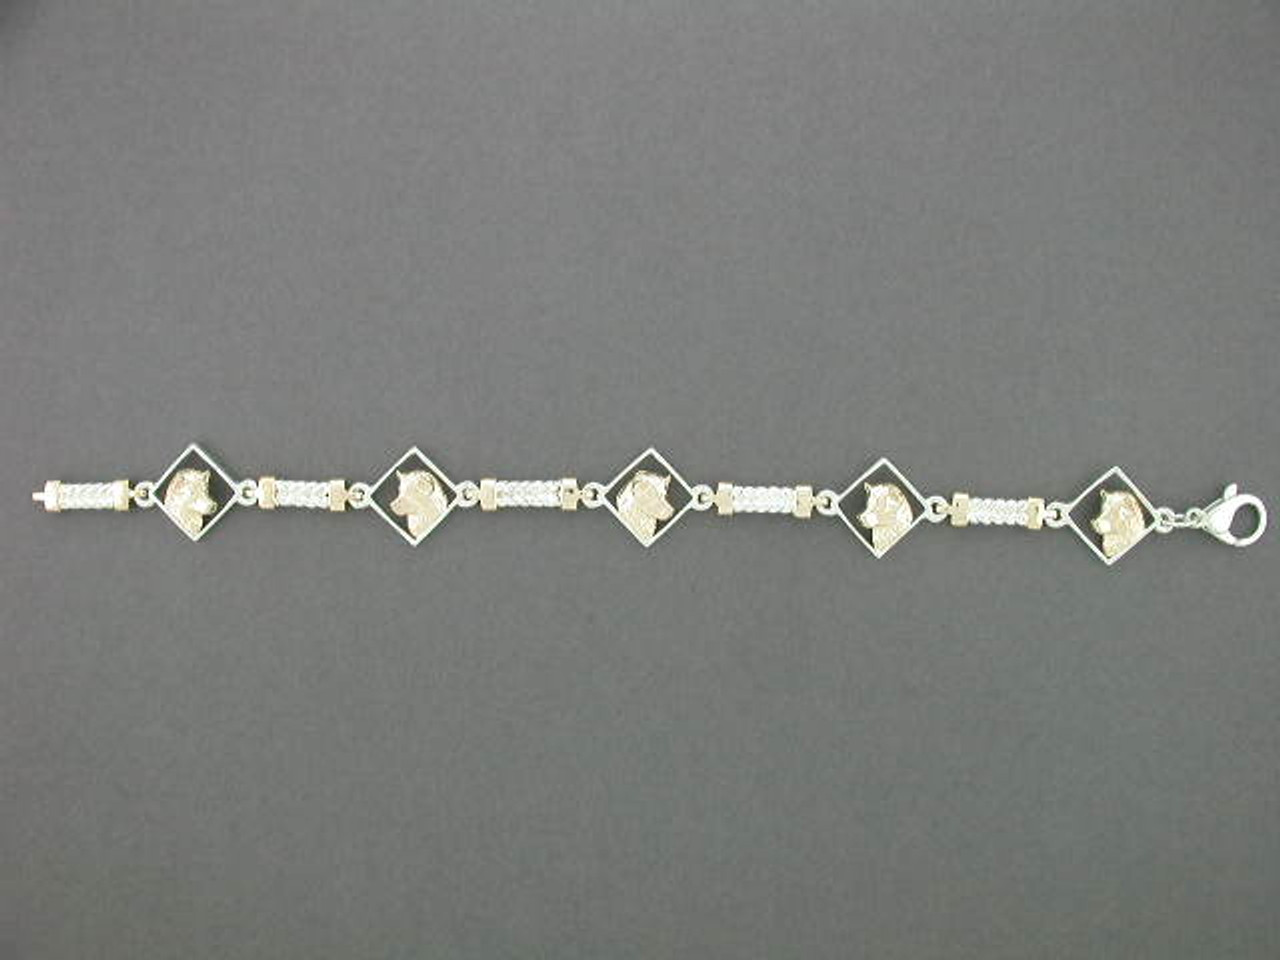 Alaskan Malamute bracelet